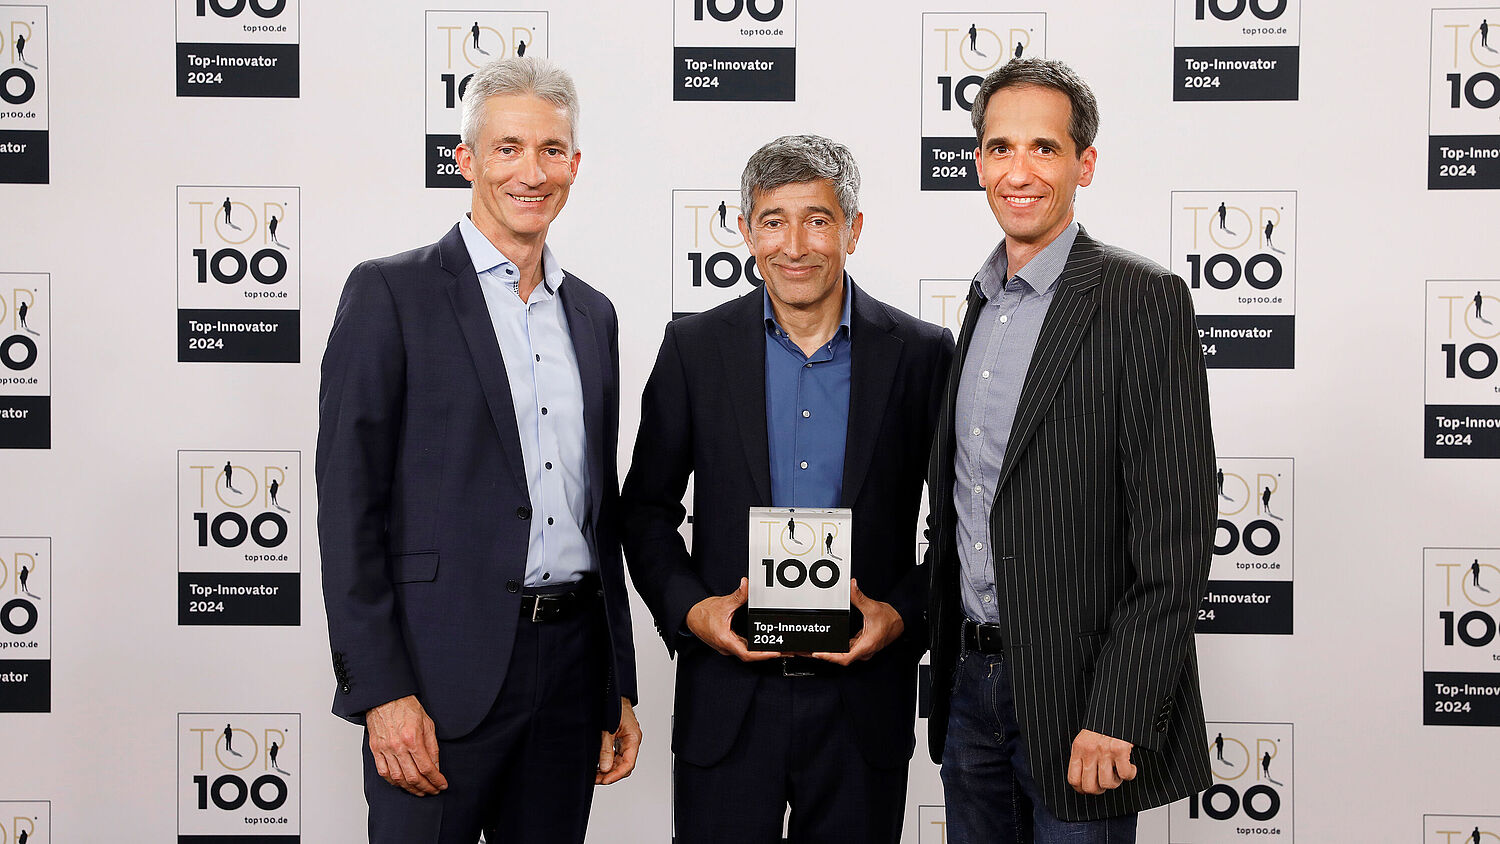 来自 FAULHABER 的 Udo Haberland 博士和 Frank Schwenker 从科学记者 Ranga Yogeshwar 手中接过 TOP100 奖杯